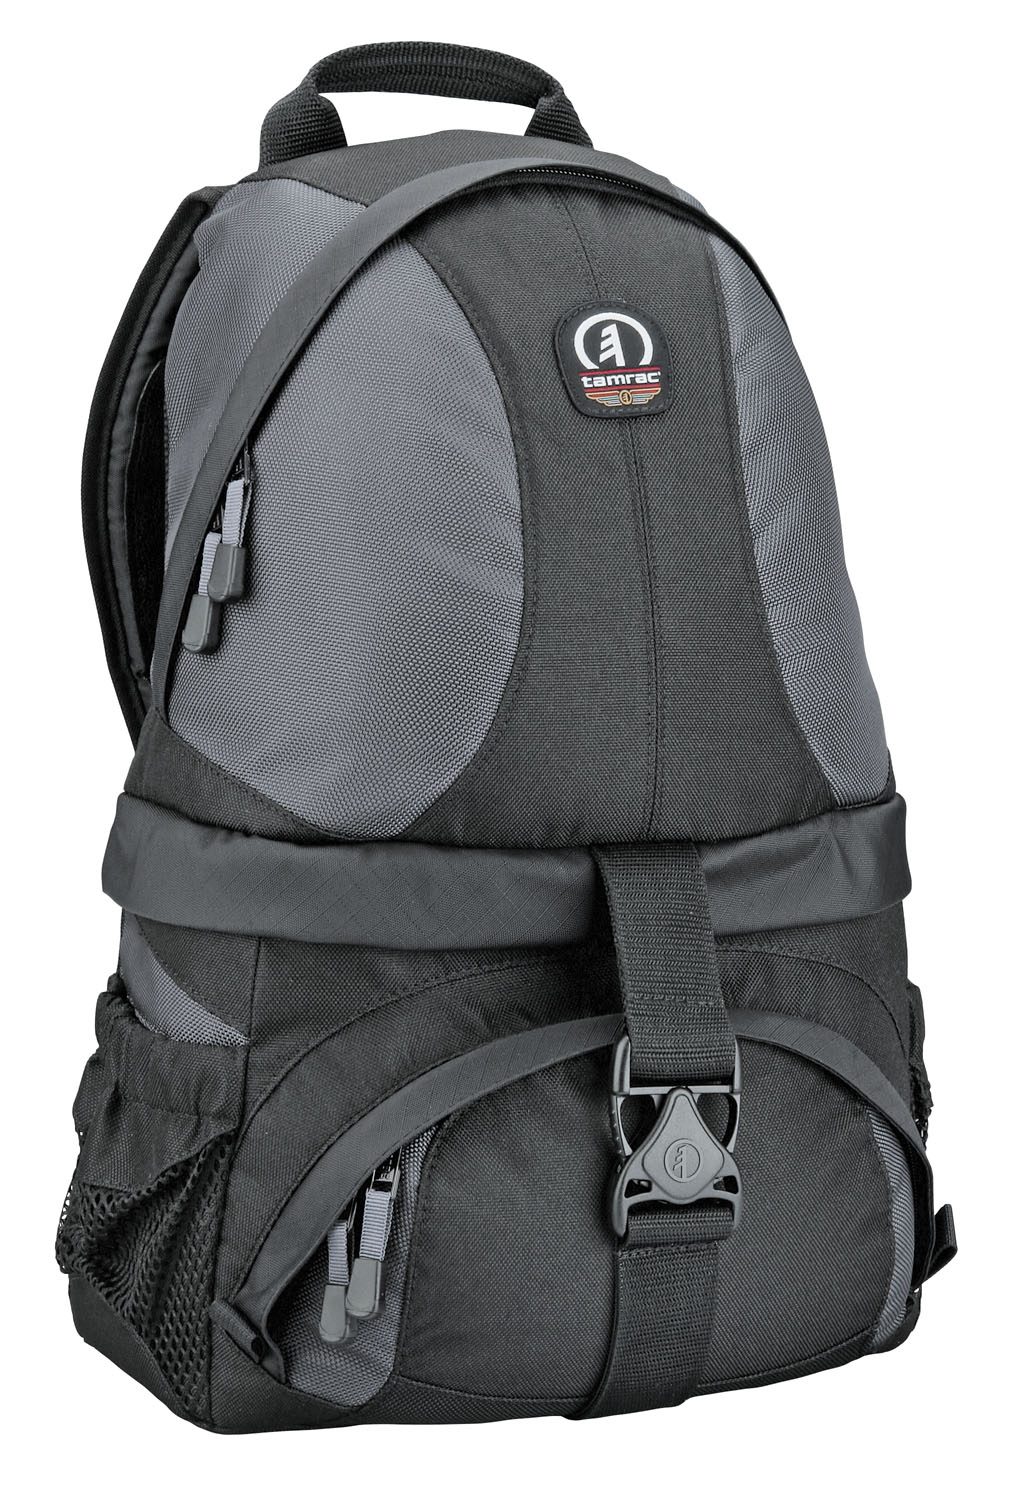 Tamrac 5547 ADVENTURE 7 Backpack